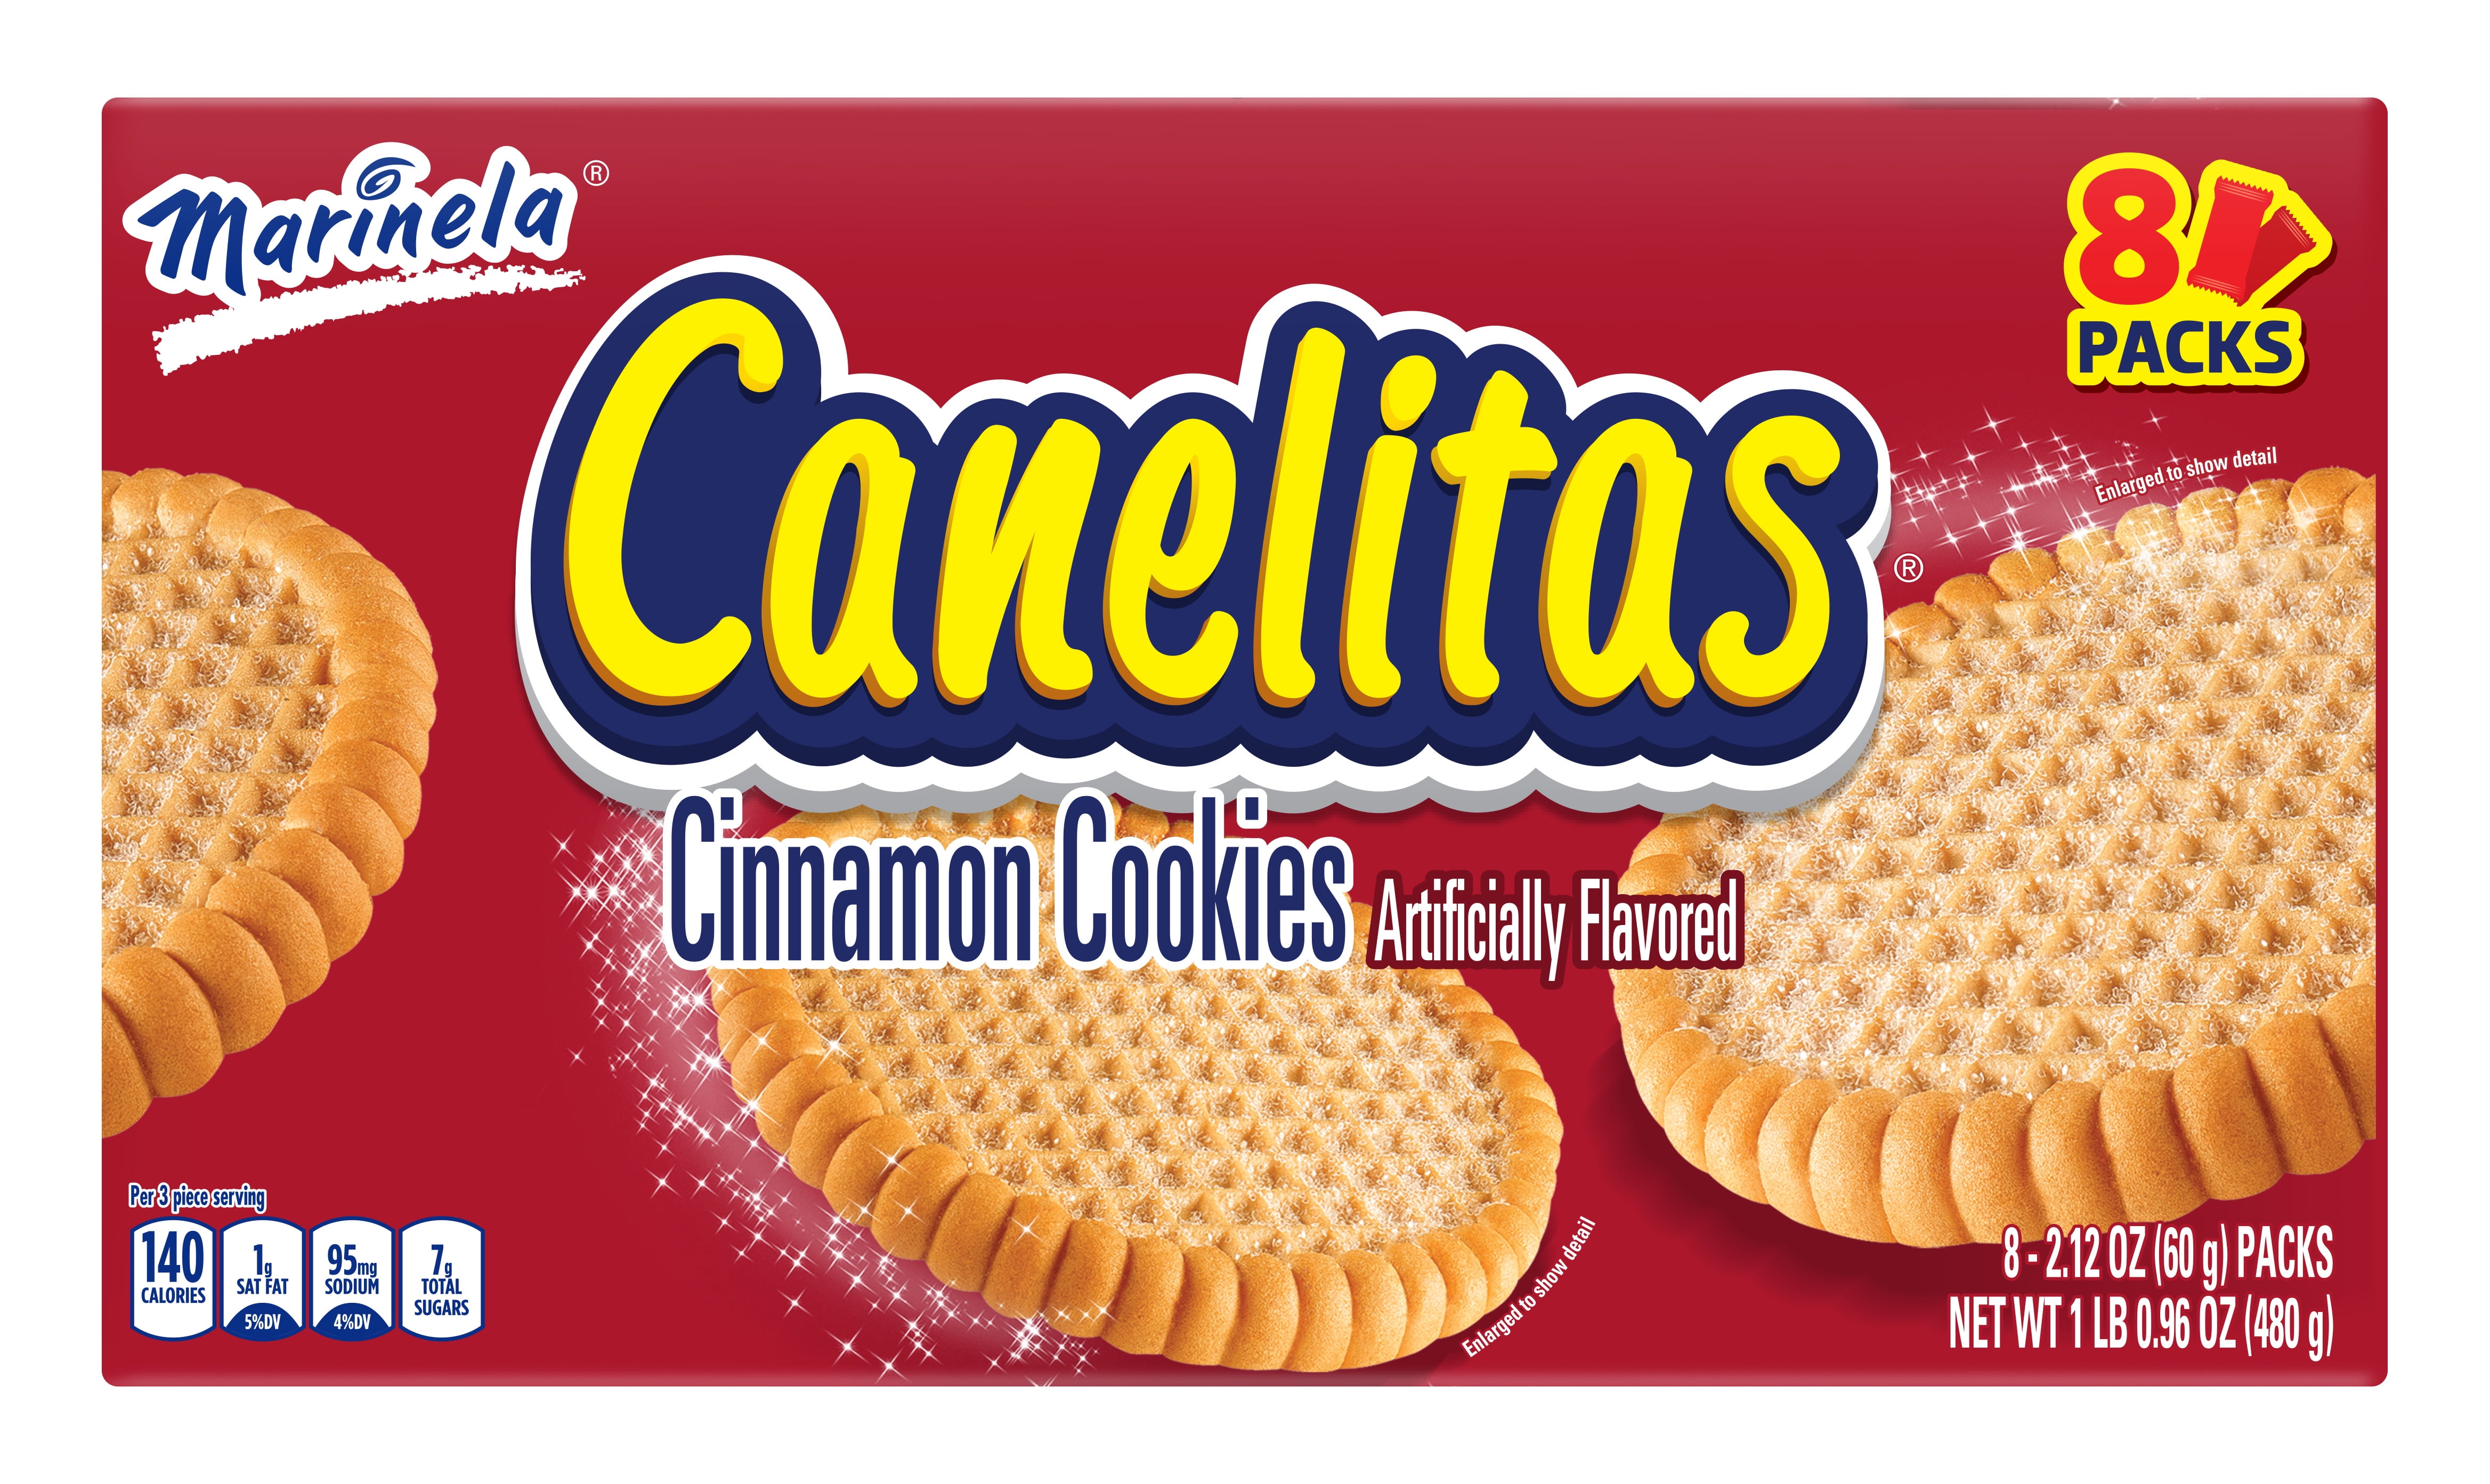 Marinela Canelitas Crispy Cinnamon Cookies 8 Packs Per Box 16 96 Oz Walmart Com Walmart Com